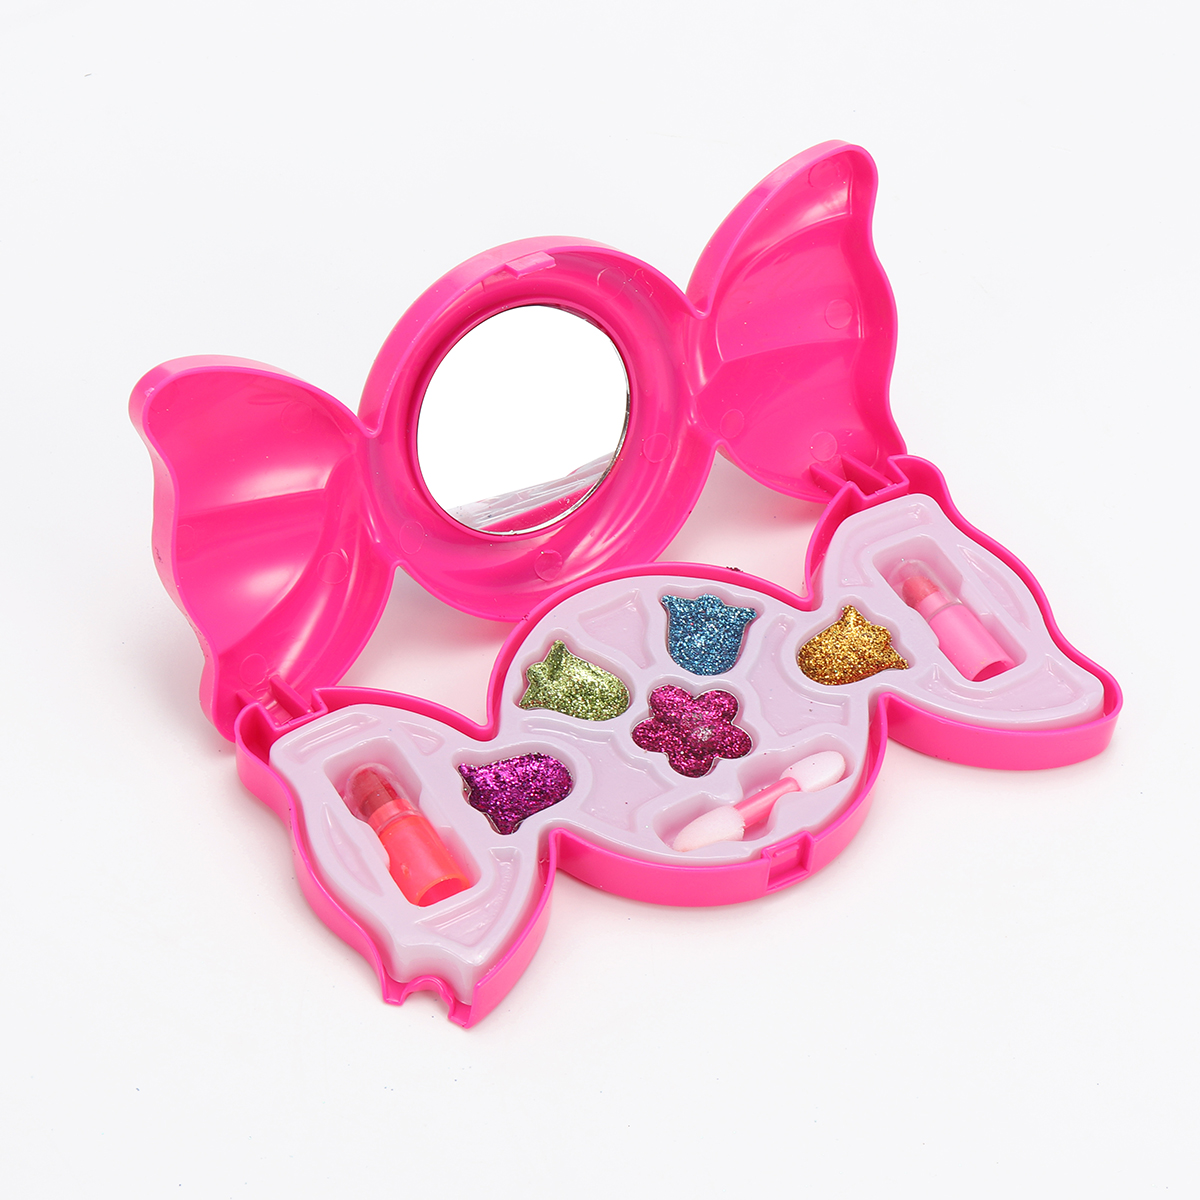 Candy-shaped Kids Makeup Kit Glitter Eye Shadow Lips Sticks